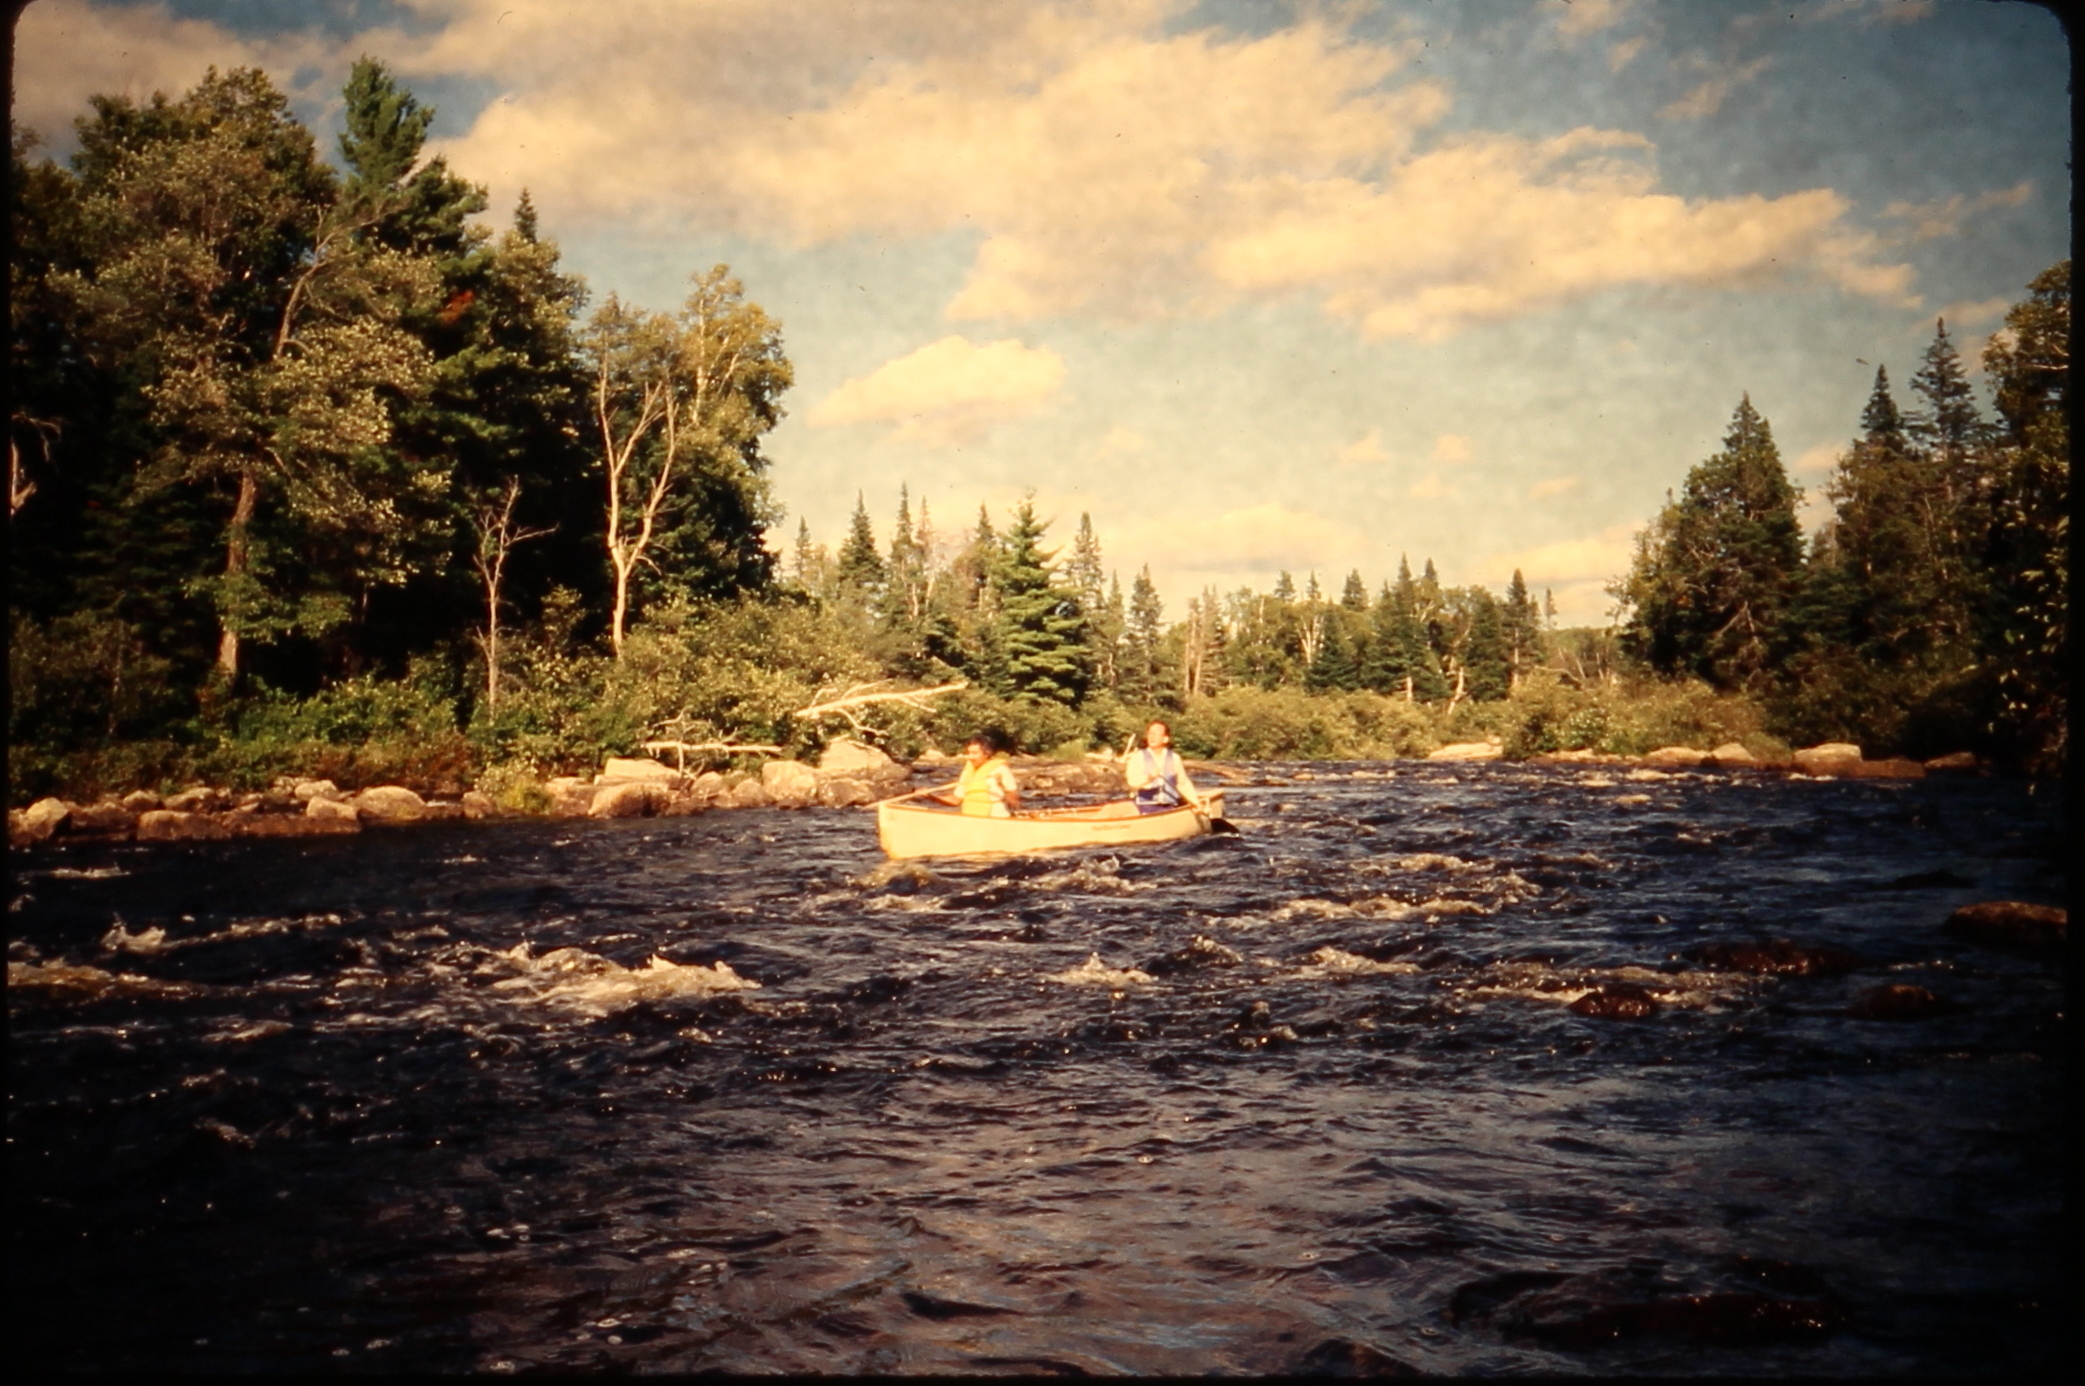 19890903.08 - USA ME -- MooseRiver - Somesh Jerry - Moose River Rapids 2 - MB01T01B11S08.JPG